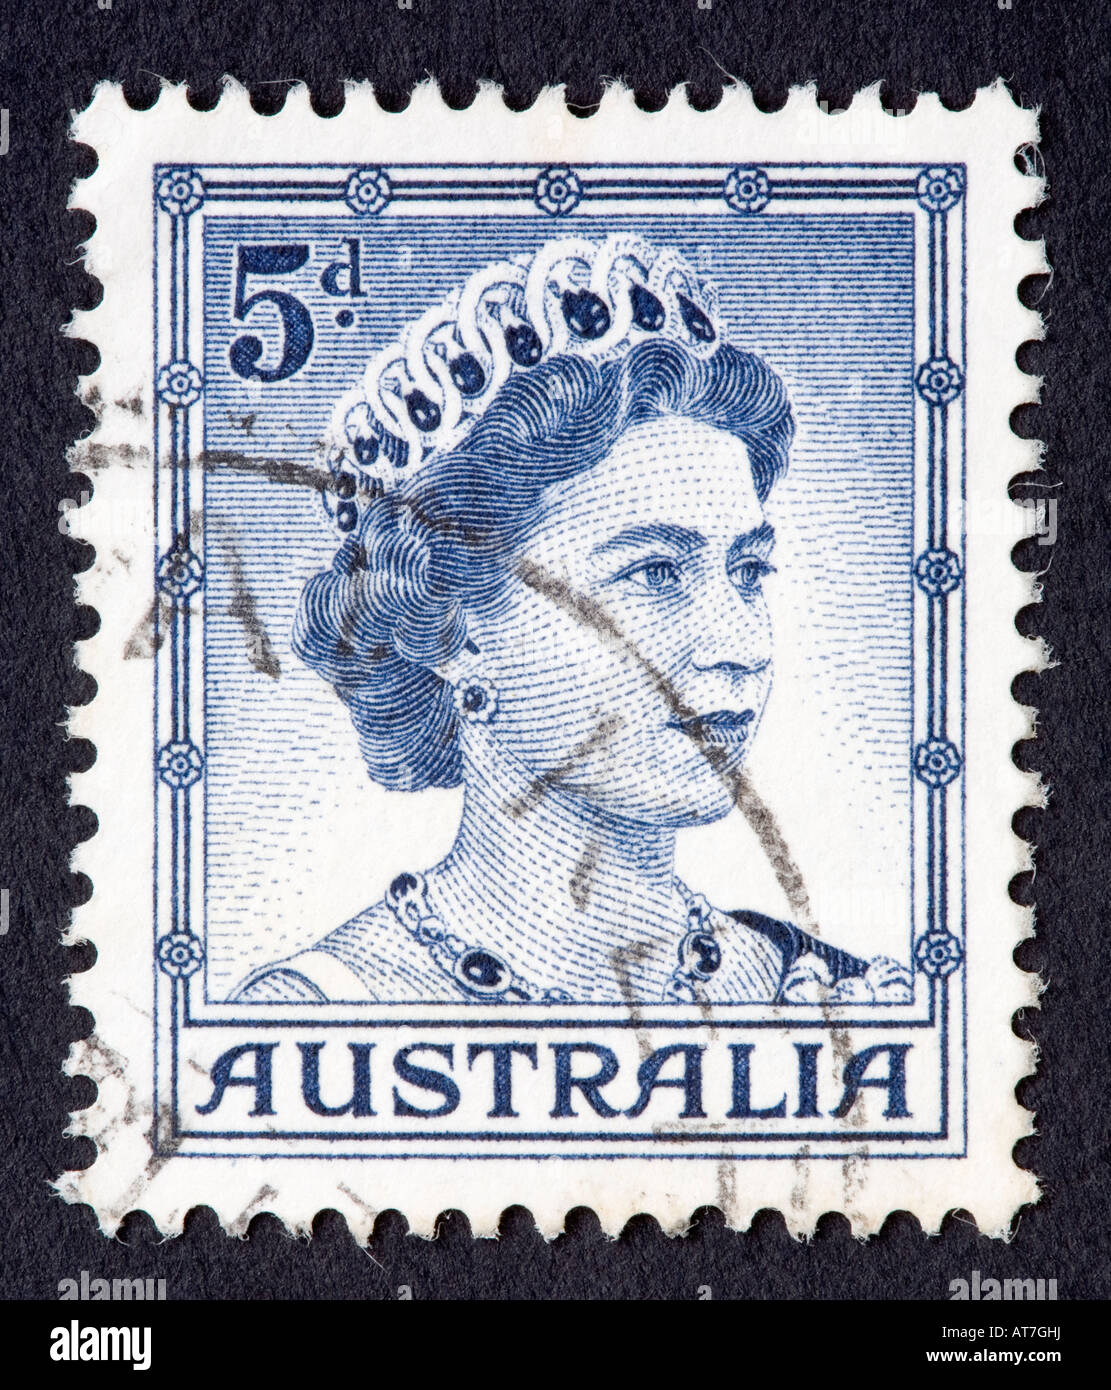 Australian postage stamp Stock Photo - Alamy